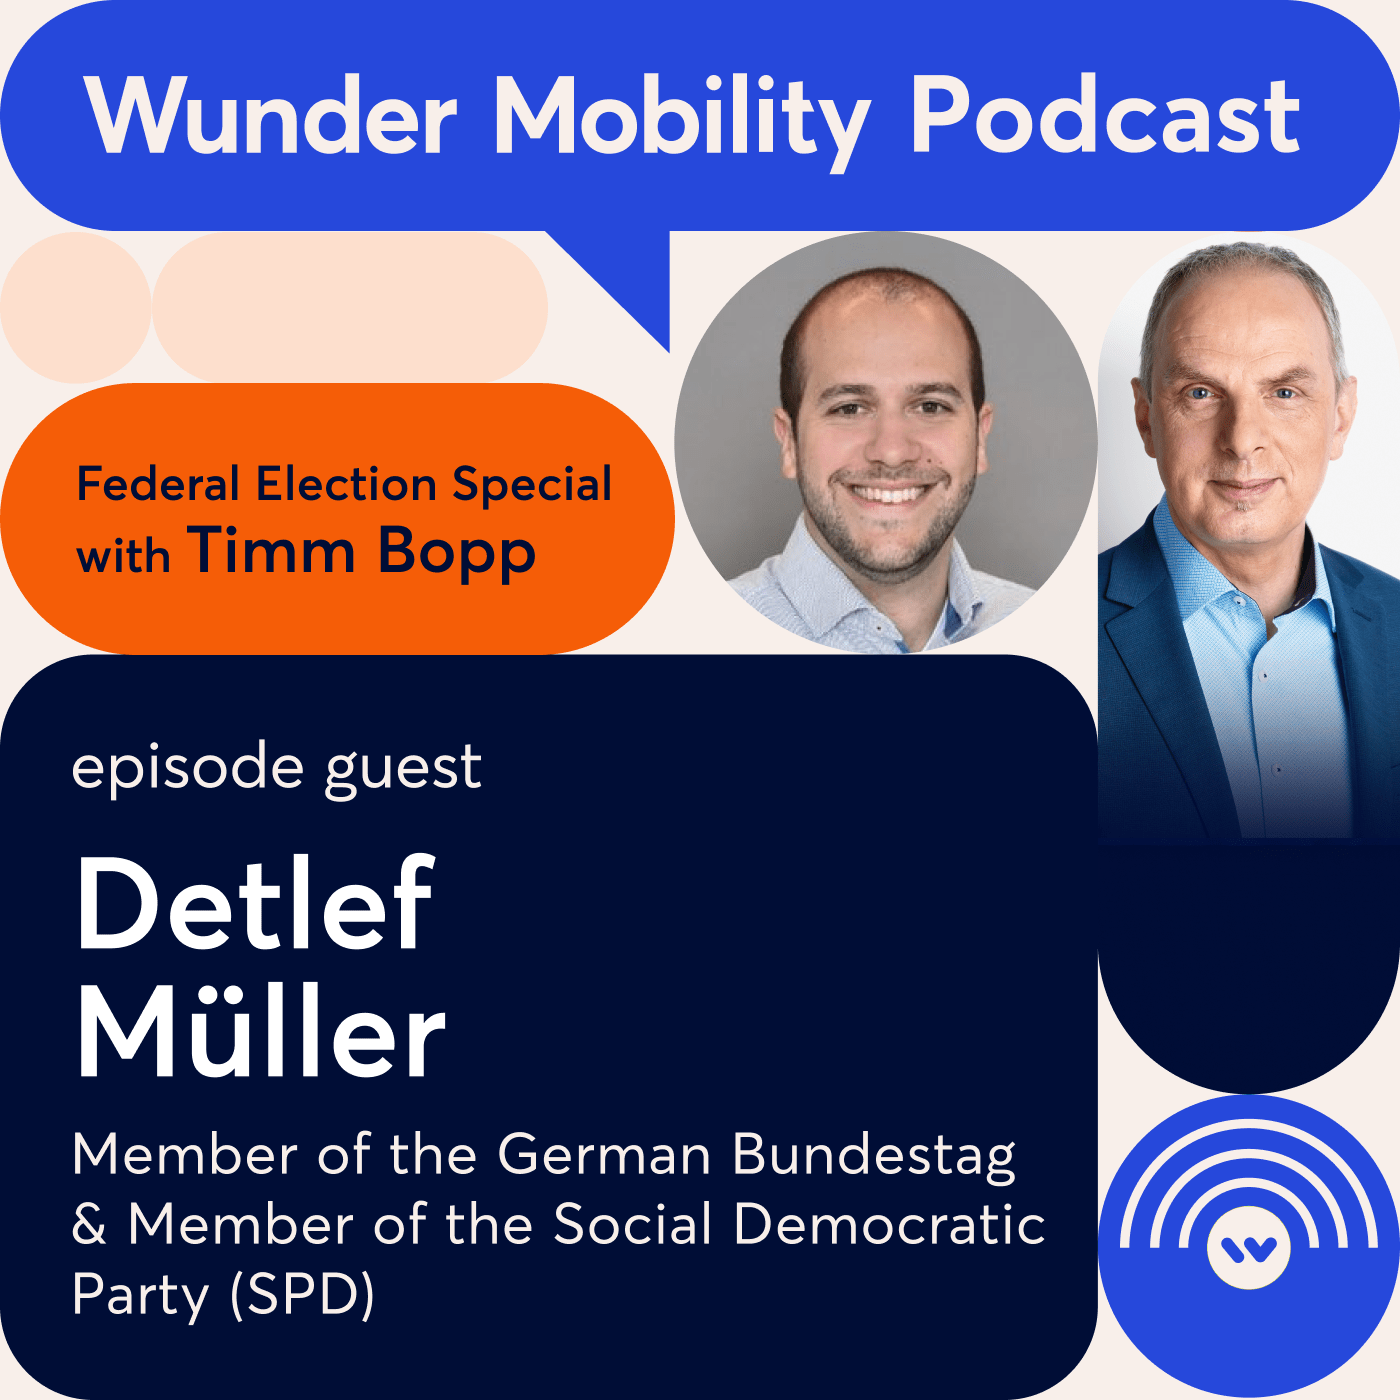 #26 Detlef Müller, Member of the German Bundestag and Member of the Social Democratic Party (SPD)